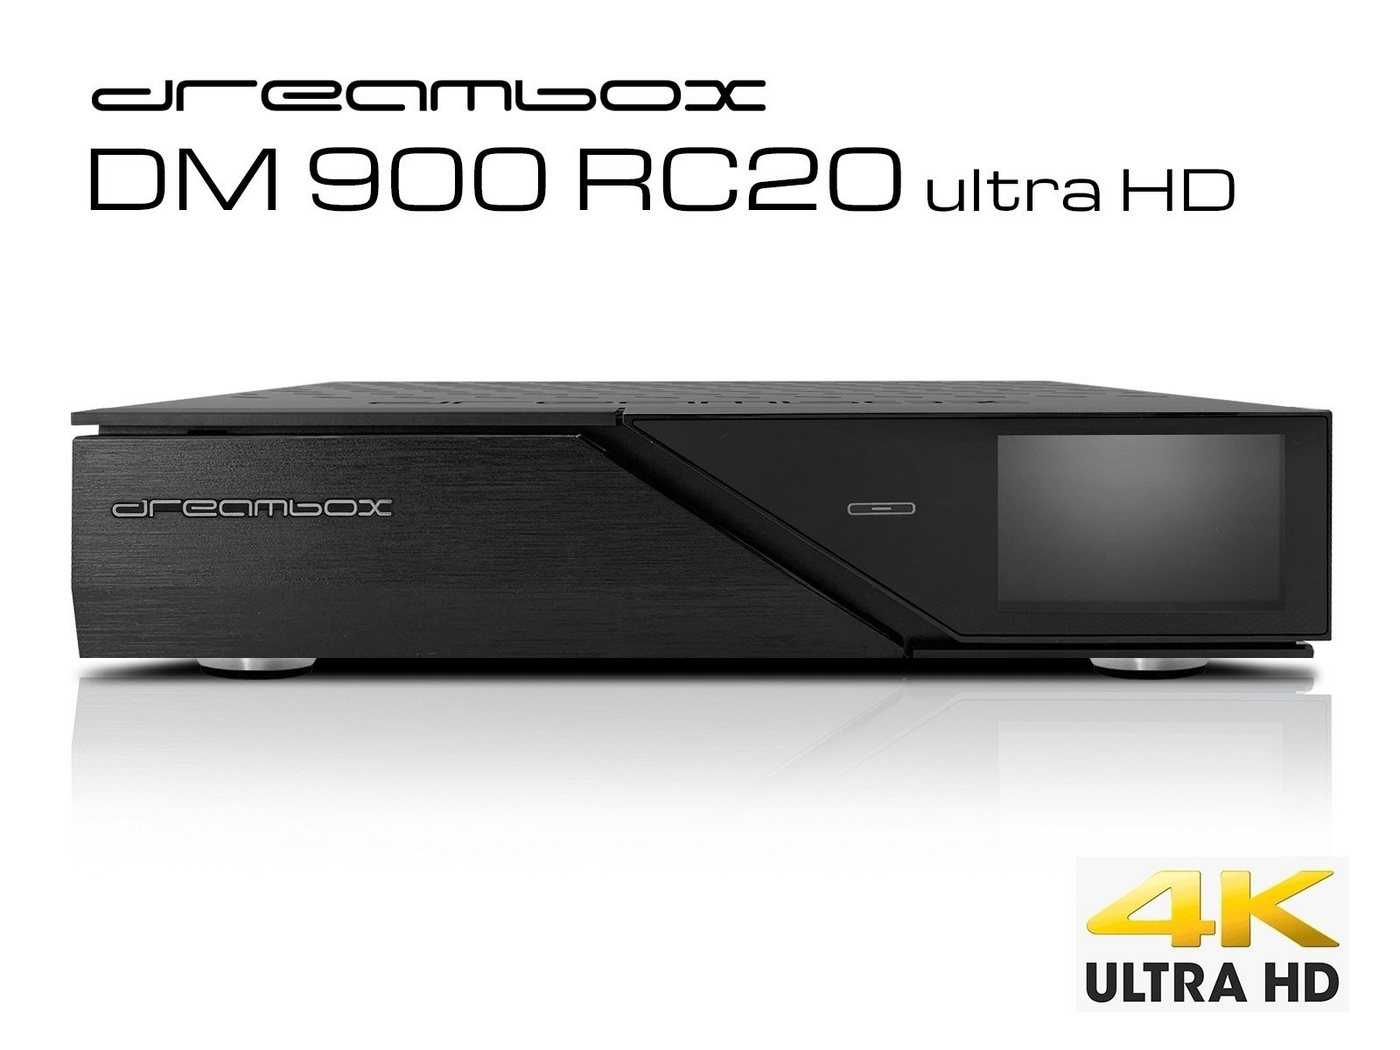 Dreambox Dreambox DM900 RC20 UHD 4K 1x DVB-S2 FBC Twin Tuner E2 Linux PVR Recei Satellitenreceiver von Dreambox